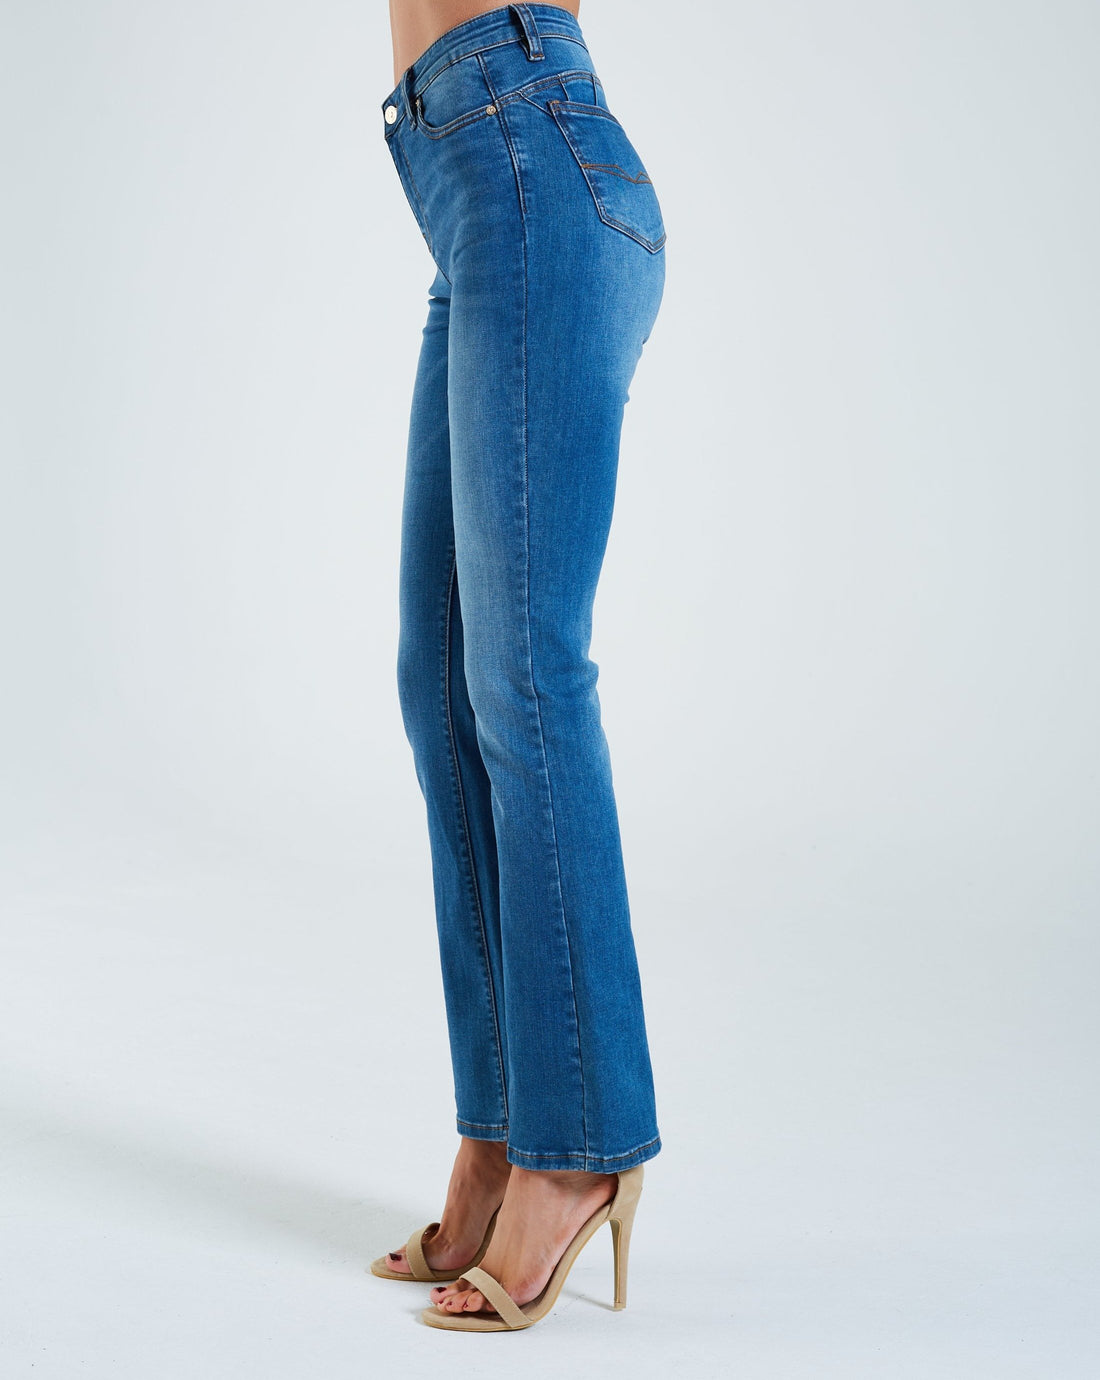 Ladies Gina High Rise Bootleg Jeans - Medium Blue Wash-Side View